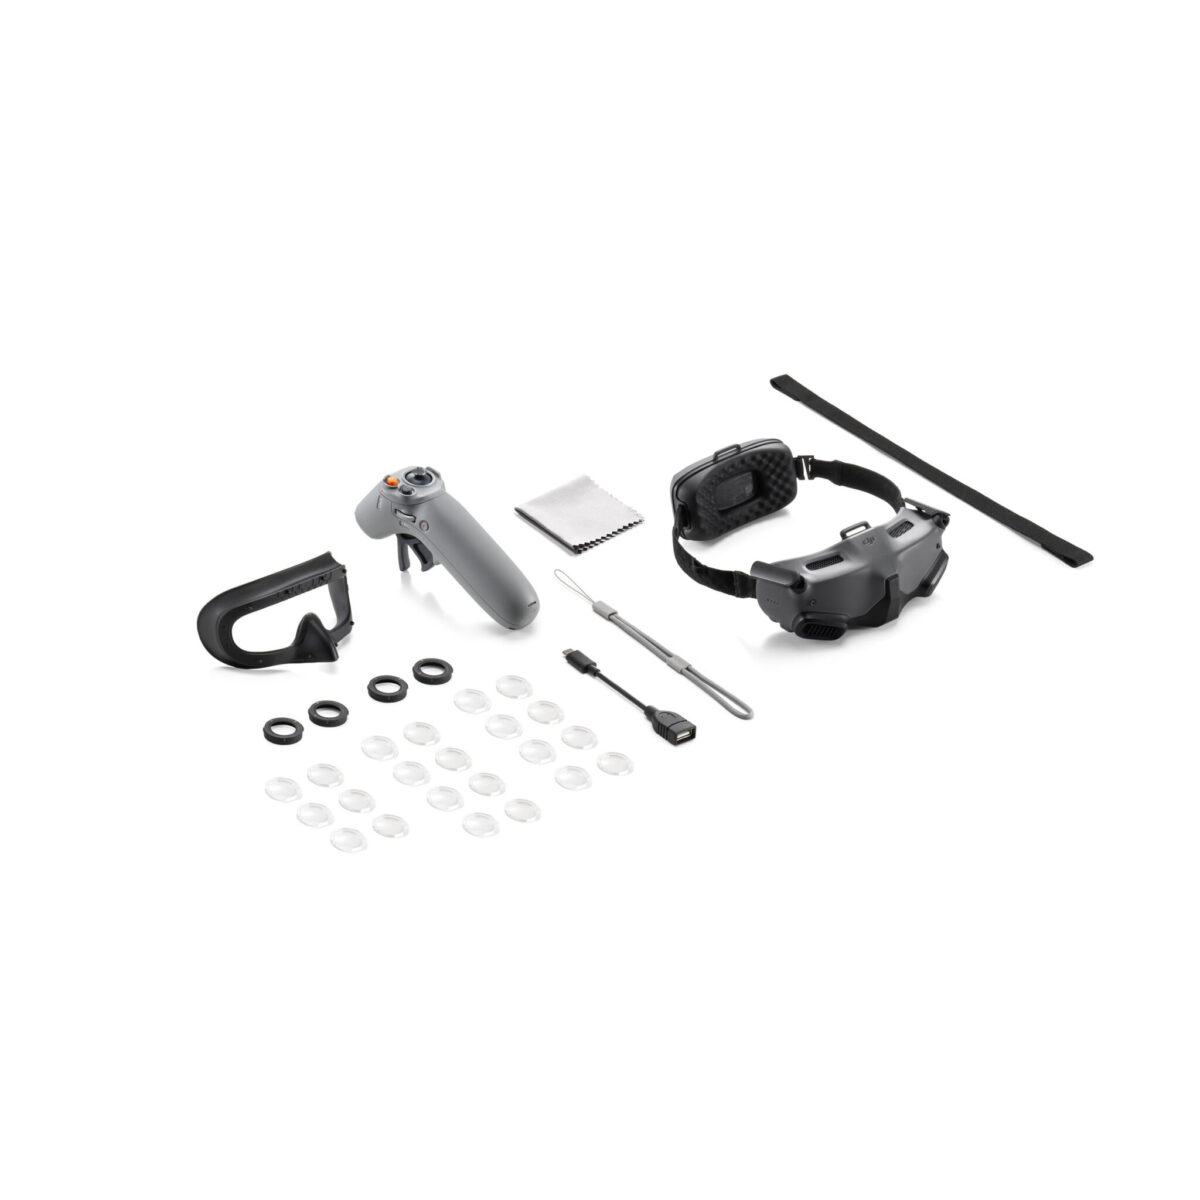 ModelForce buy DJI Goggles Integra Motion Combo Kit in Tallinn